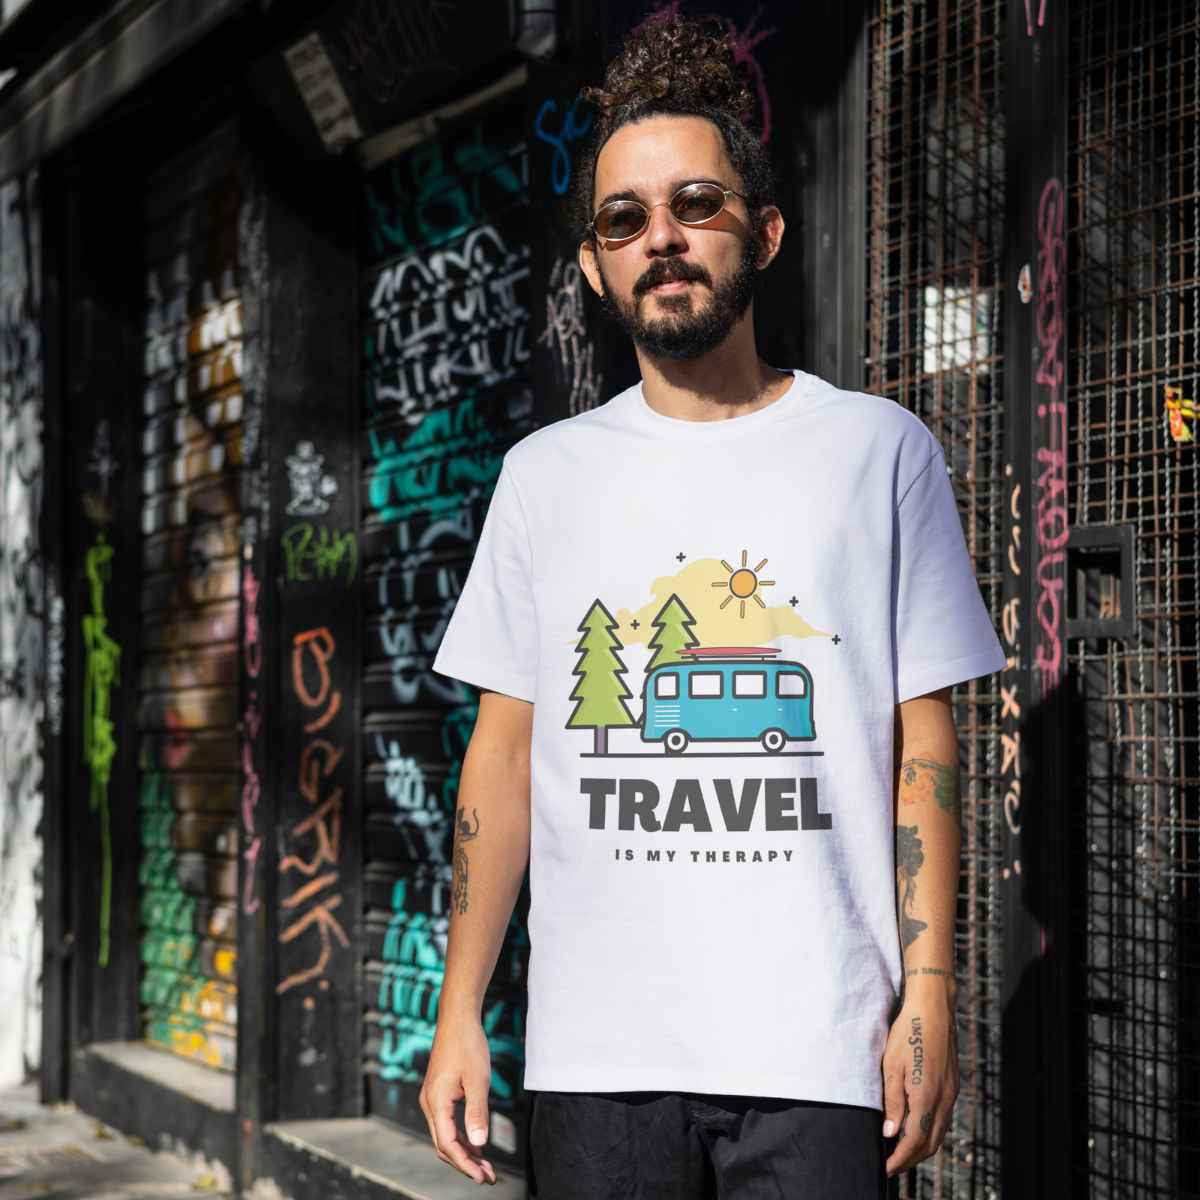 Travel t-shirts